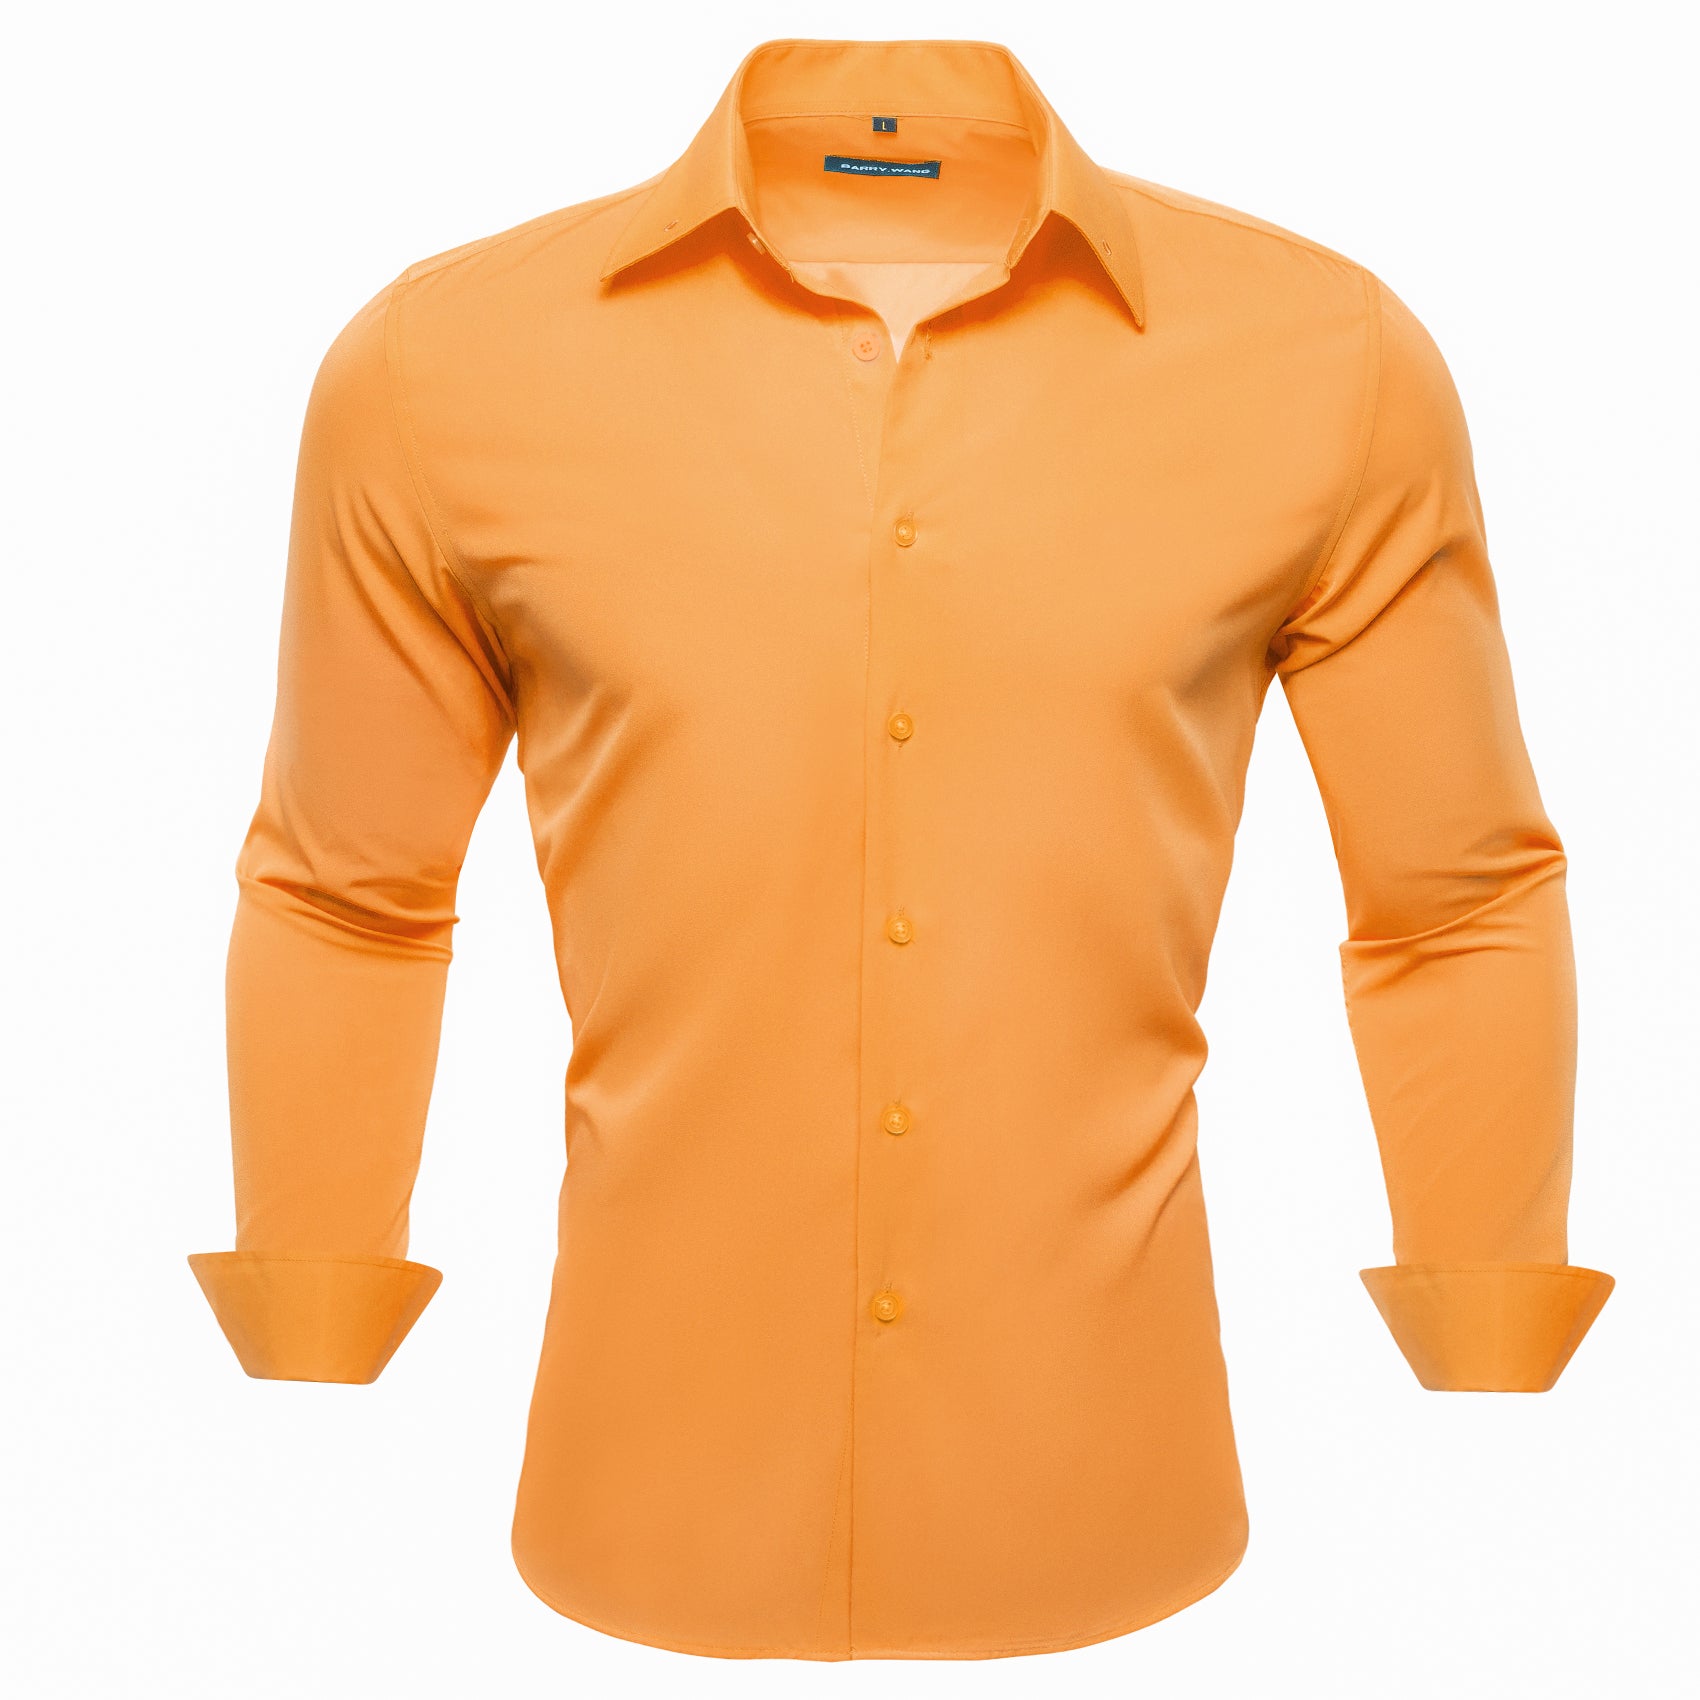 Barry.wang Dark Orange Solid Silk Shirt